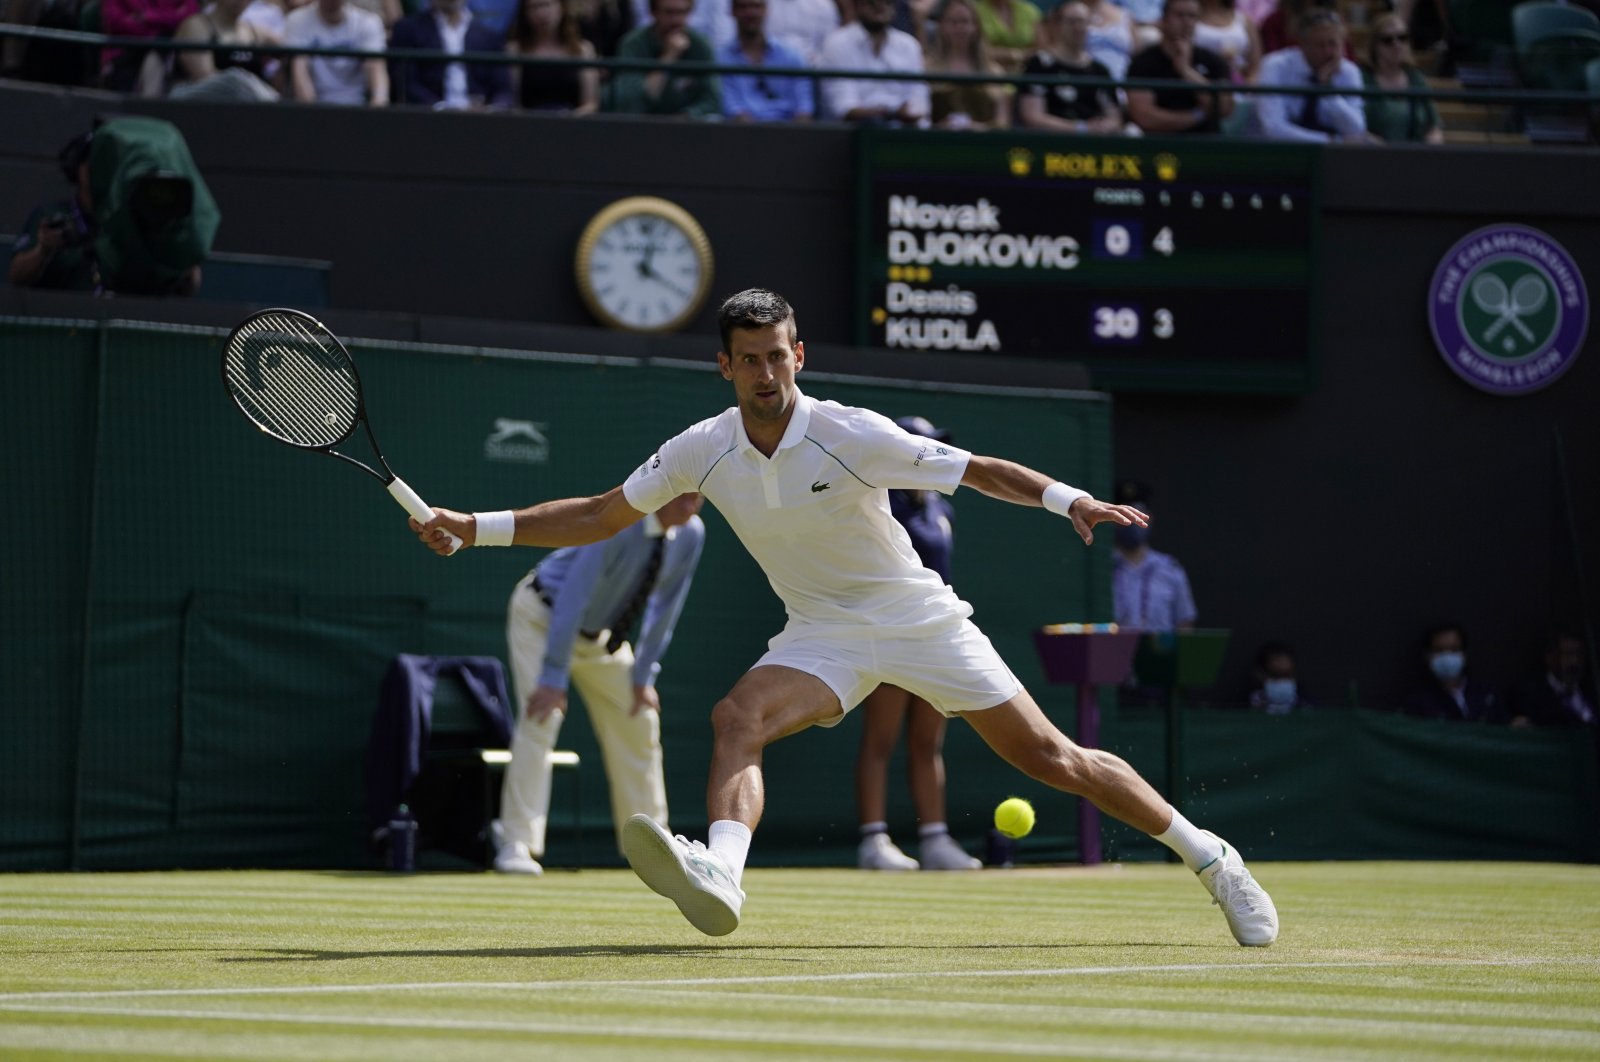 Serbia's Novak Djokovic plays a return to Denis Kudla of the U.S. during the Wimbledon men's singles third round match in London, England, July 2, 2021. (AP Photo)